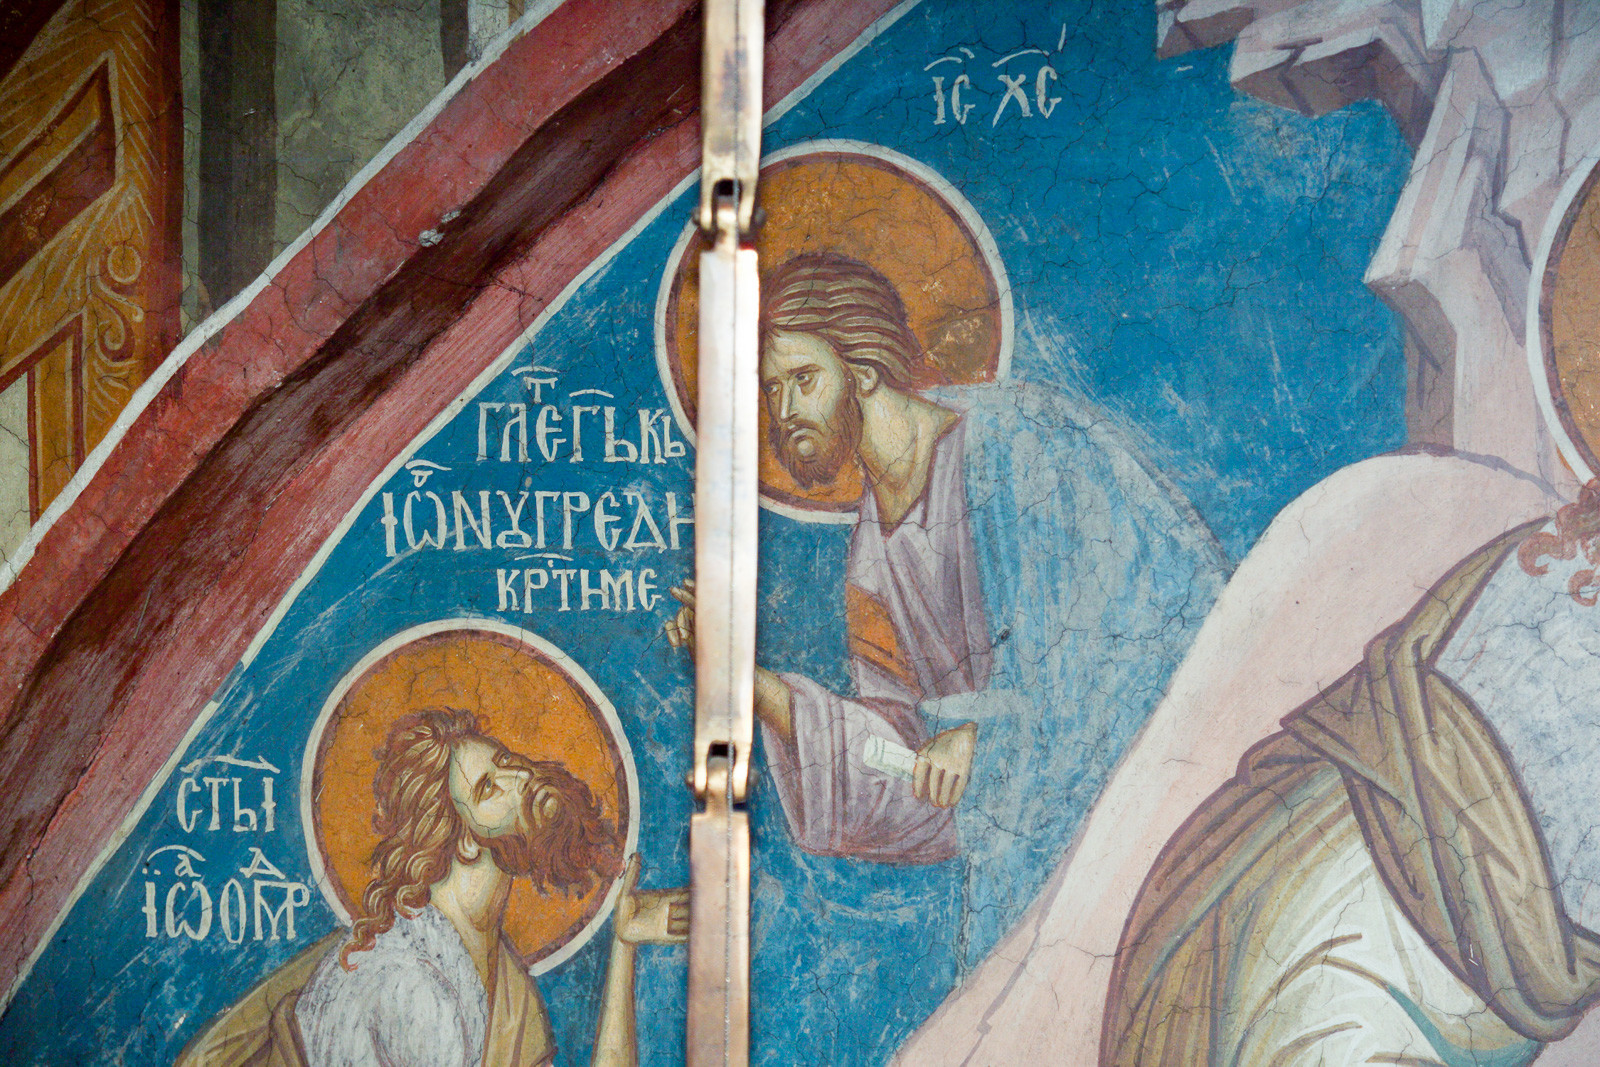 22b Christ talking to St. John the Baptist before the Baptism